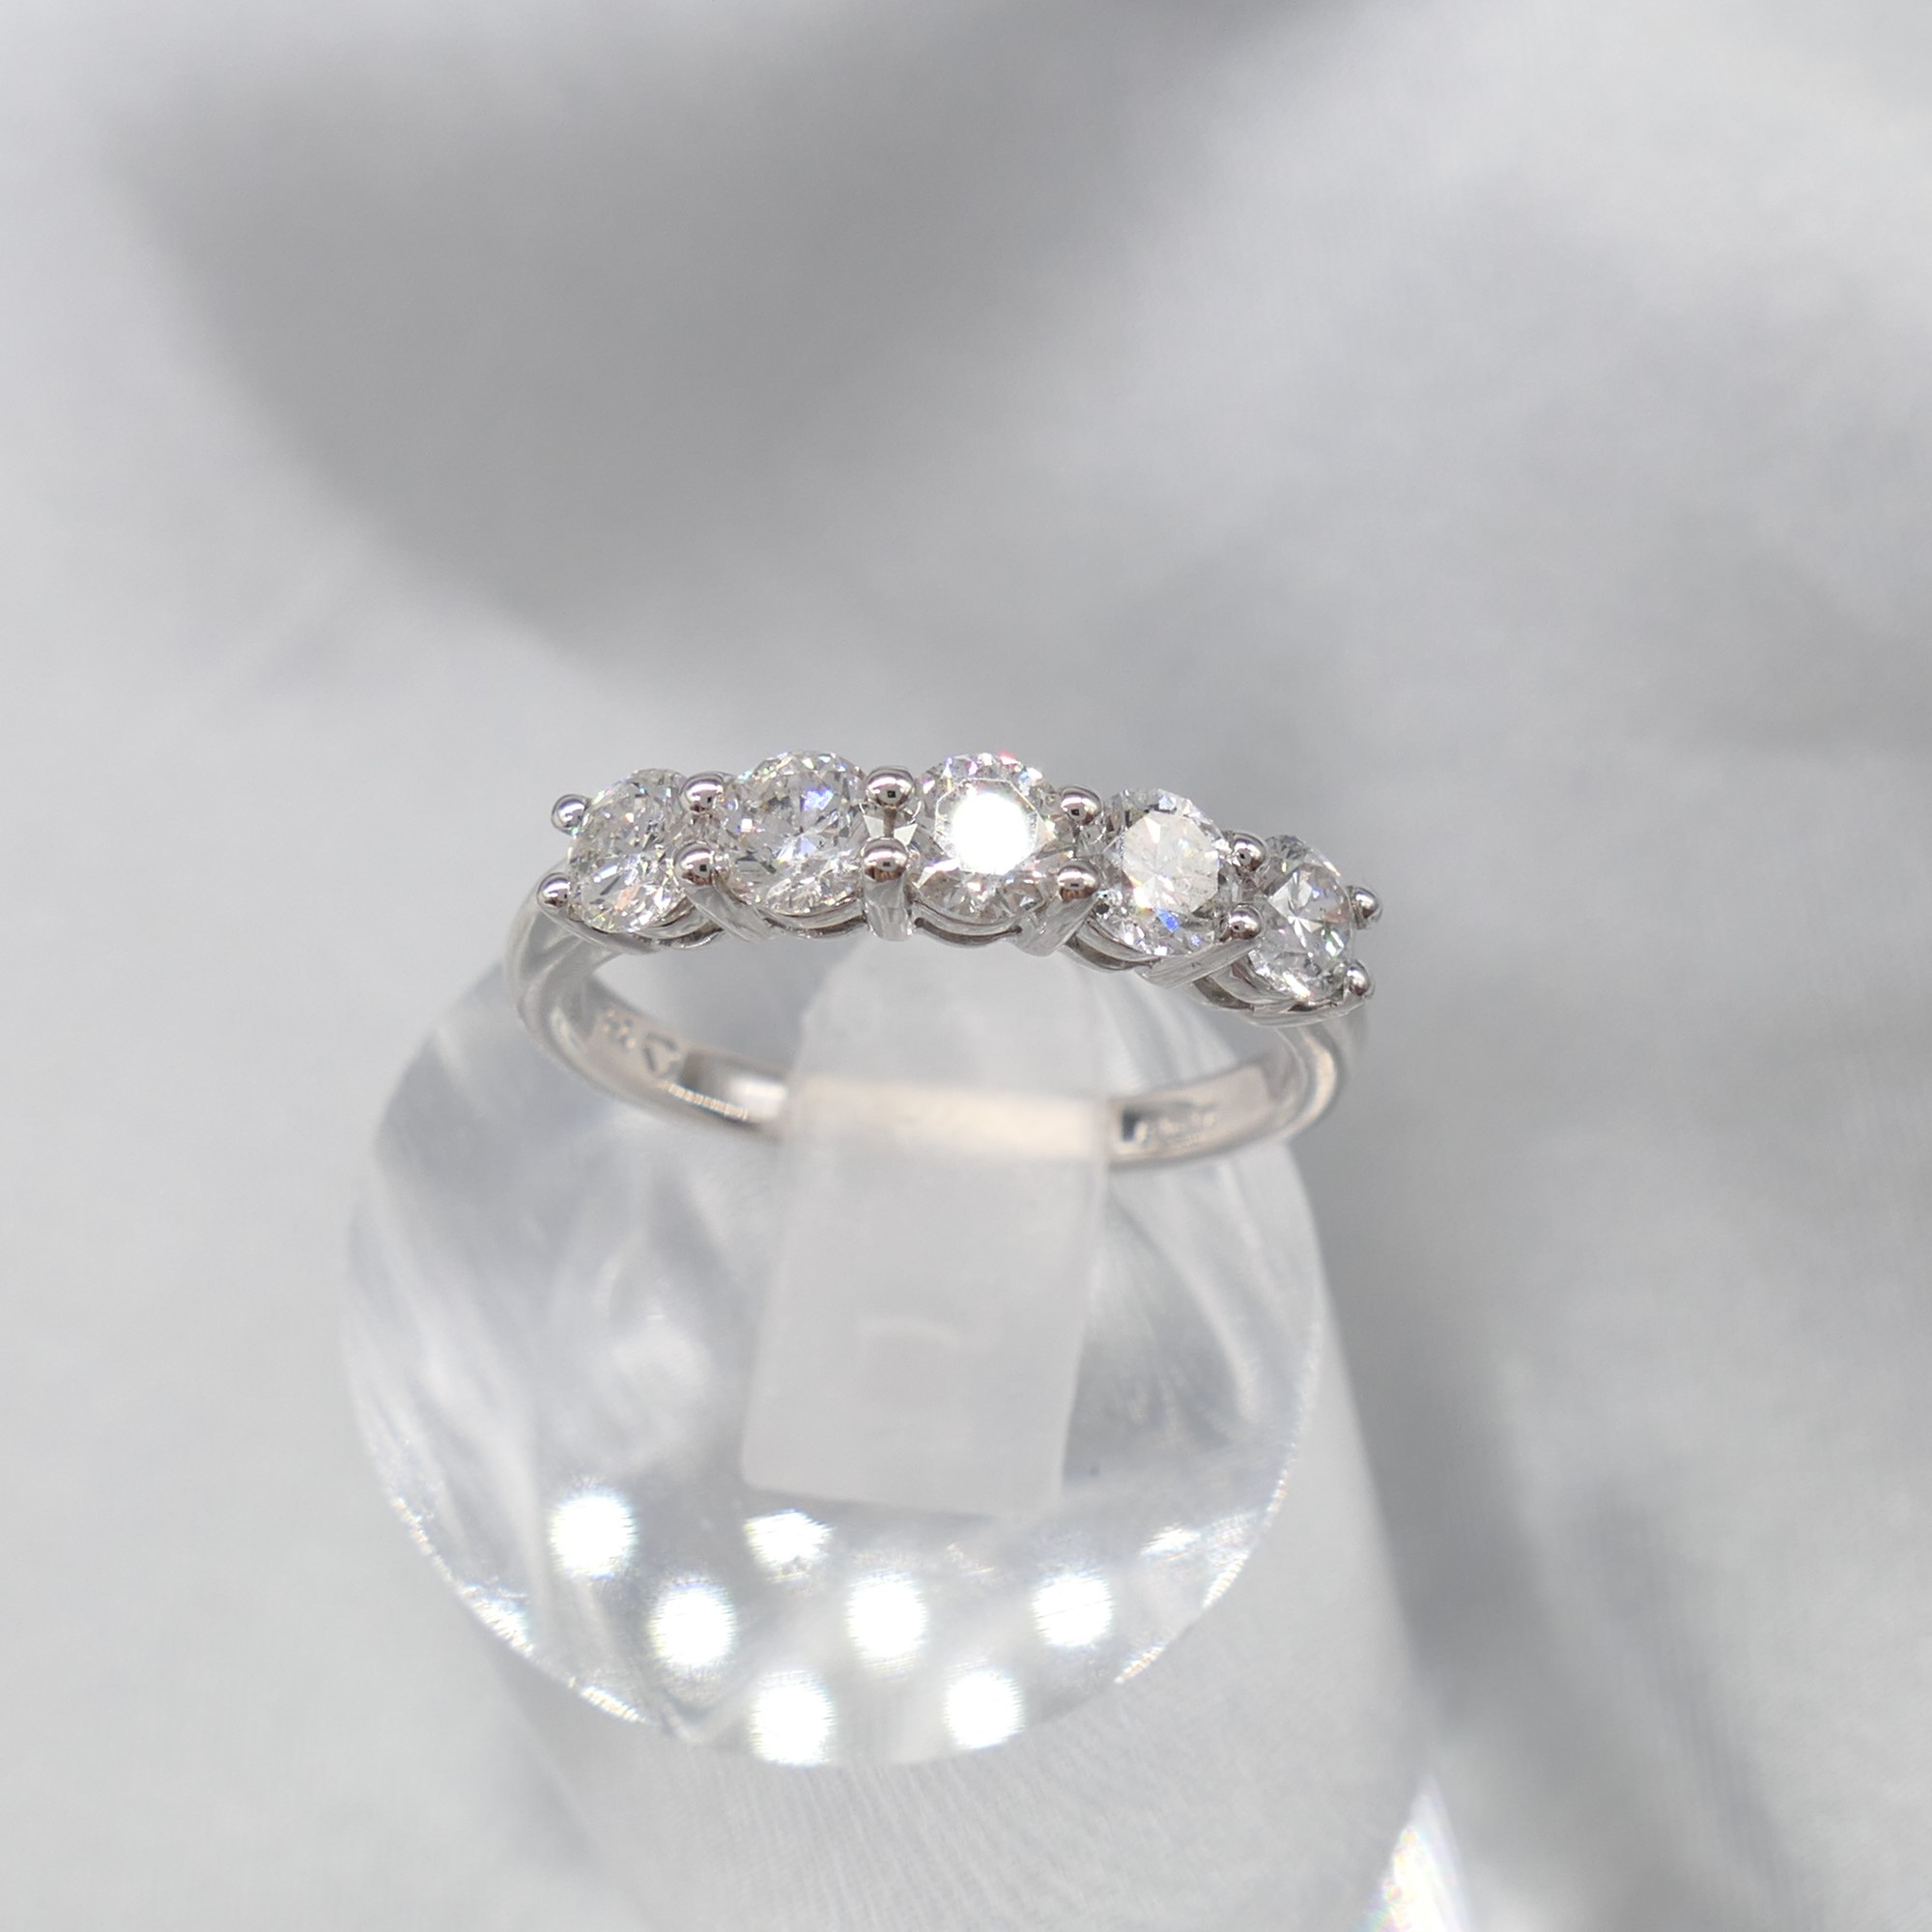 18K White Gold 1.09 Carat Round Brilliant-Cut Diamond 5-Stone Ring - Image 5 of 6